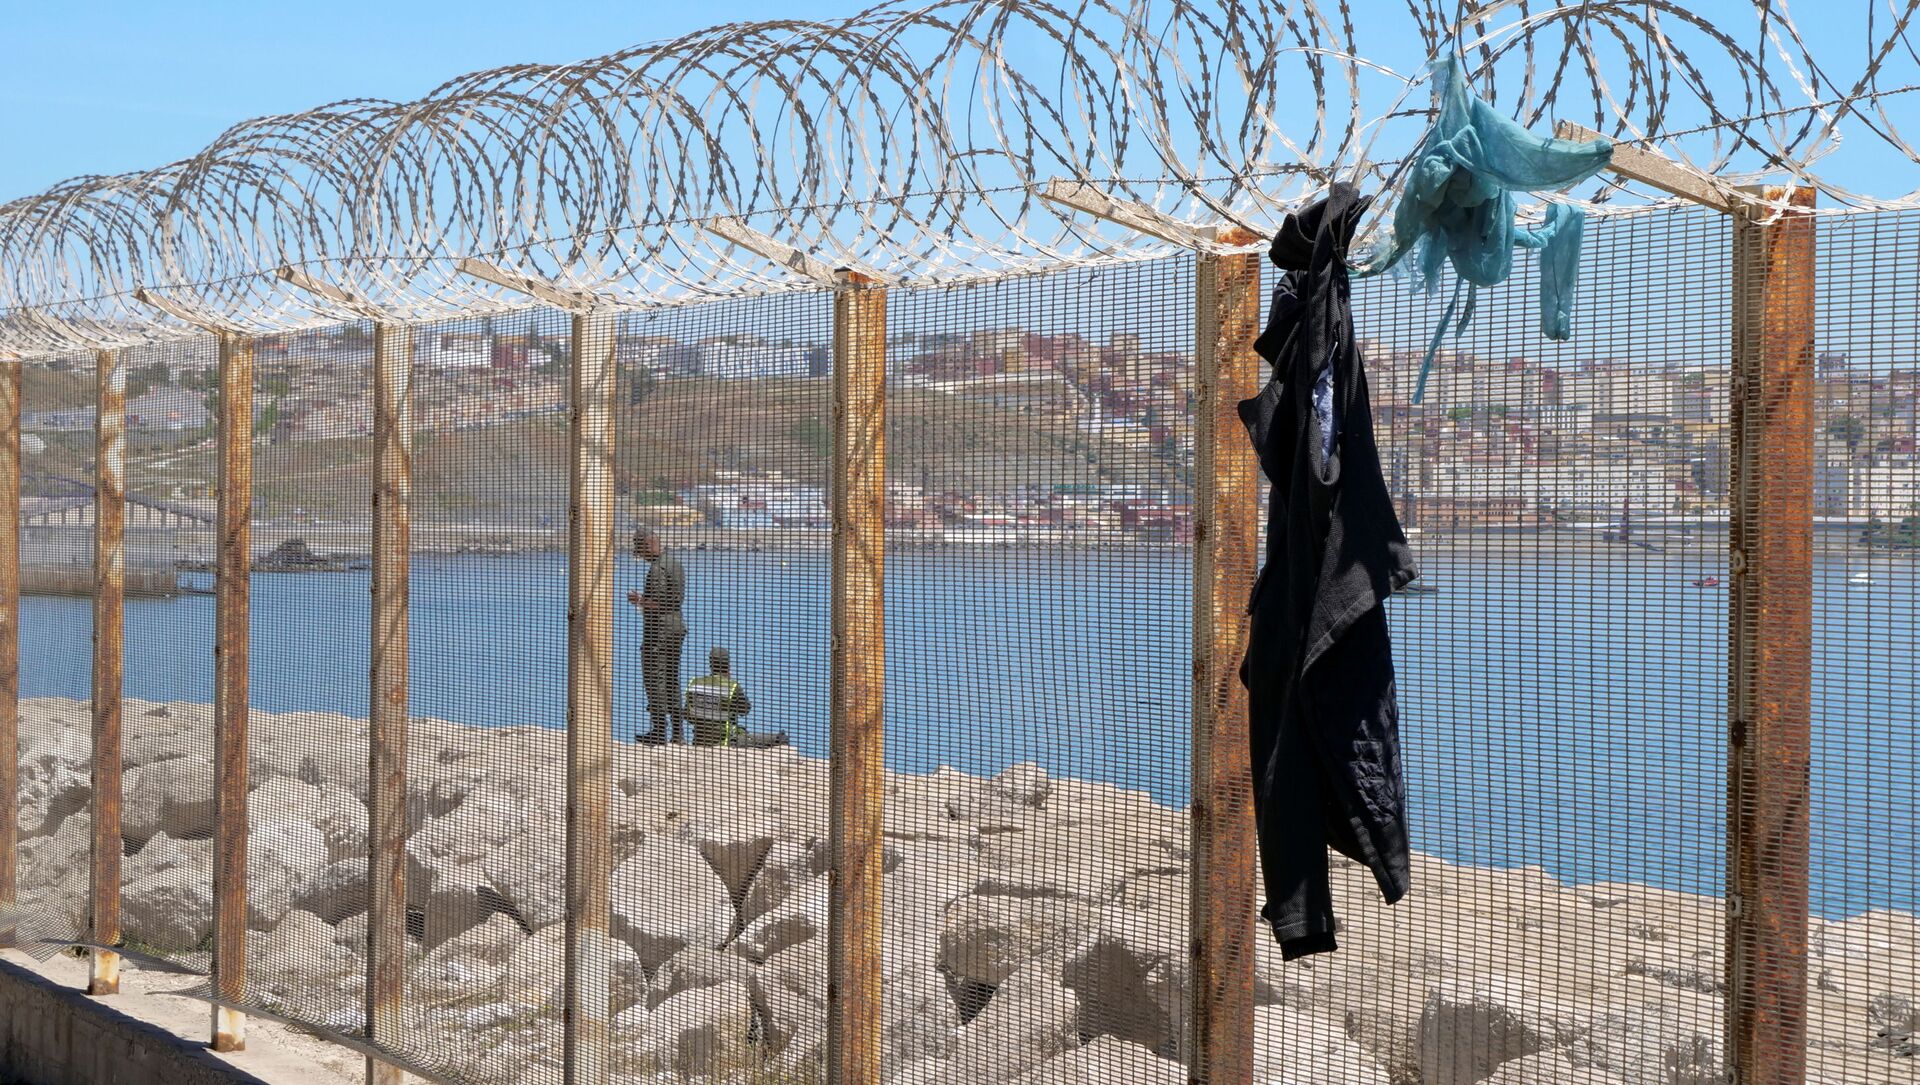 Одежда висит на заборе в Фнидеке, недалеко от испанского анклава Сеута, в Марокко - Sputnik Беларусь, 1920, 25.06.2021